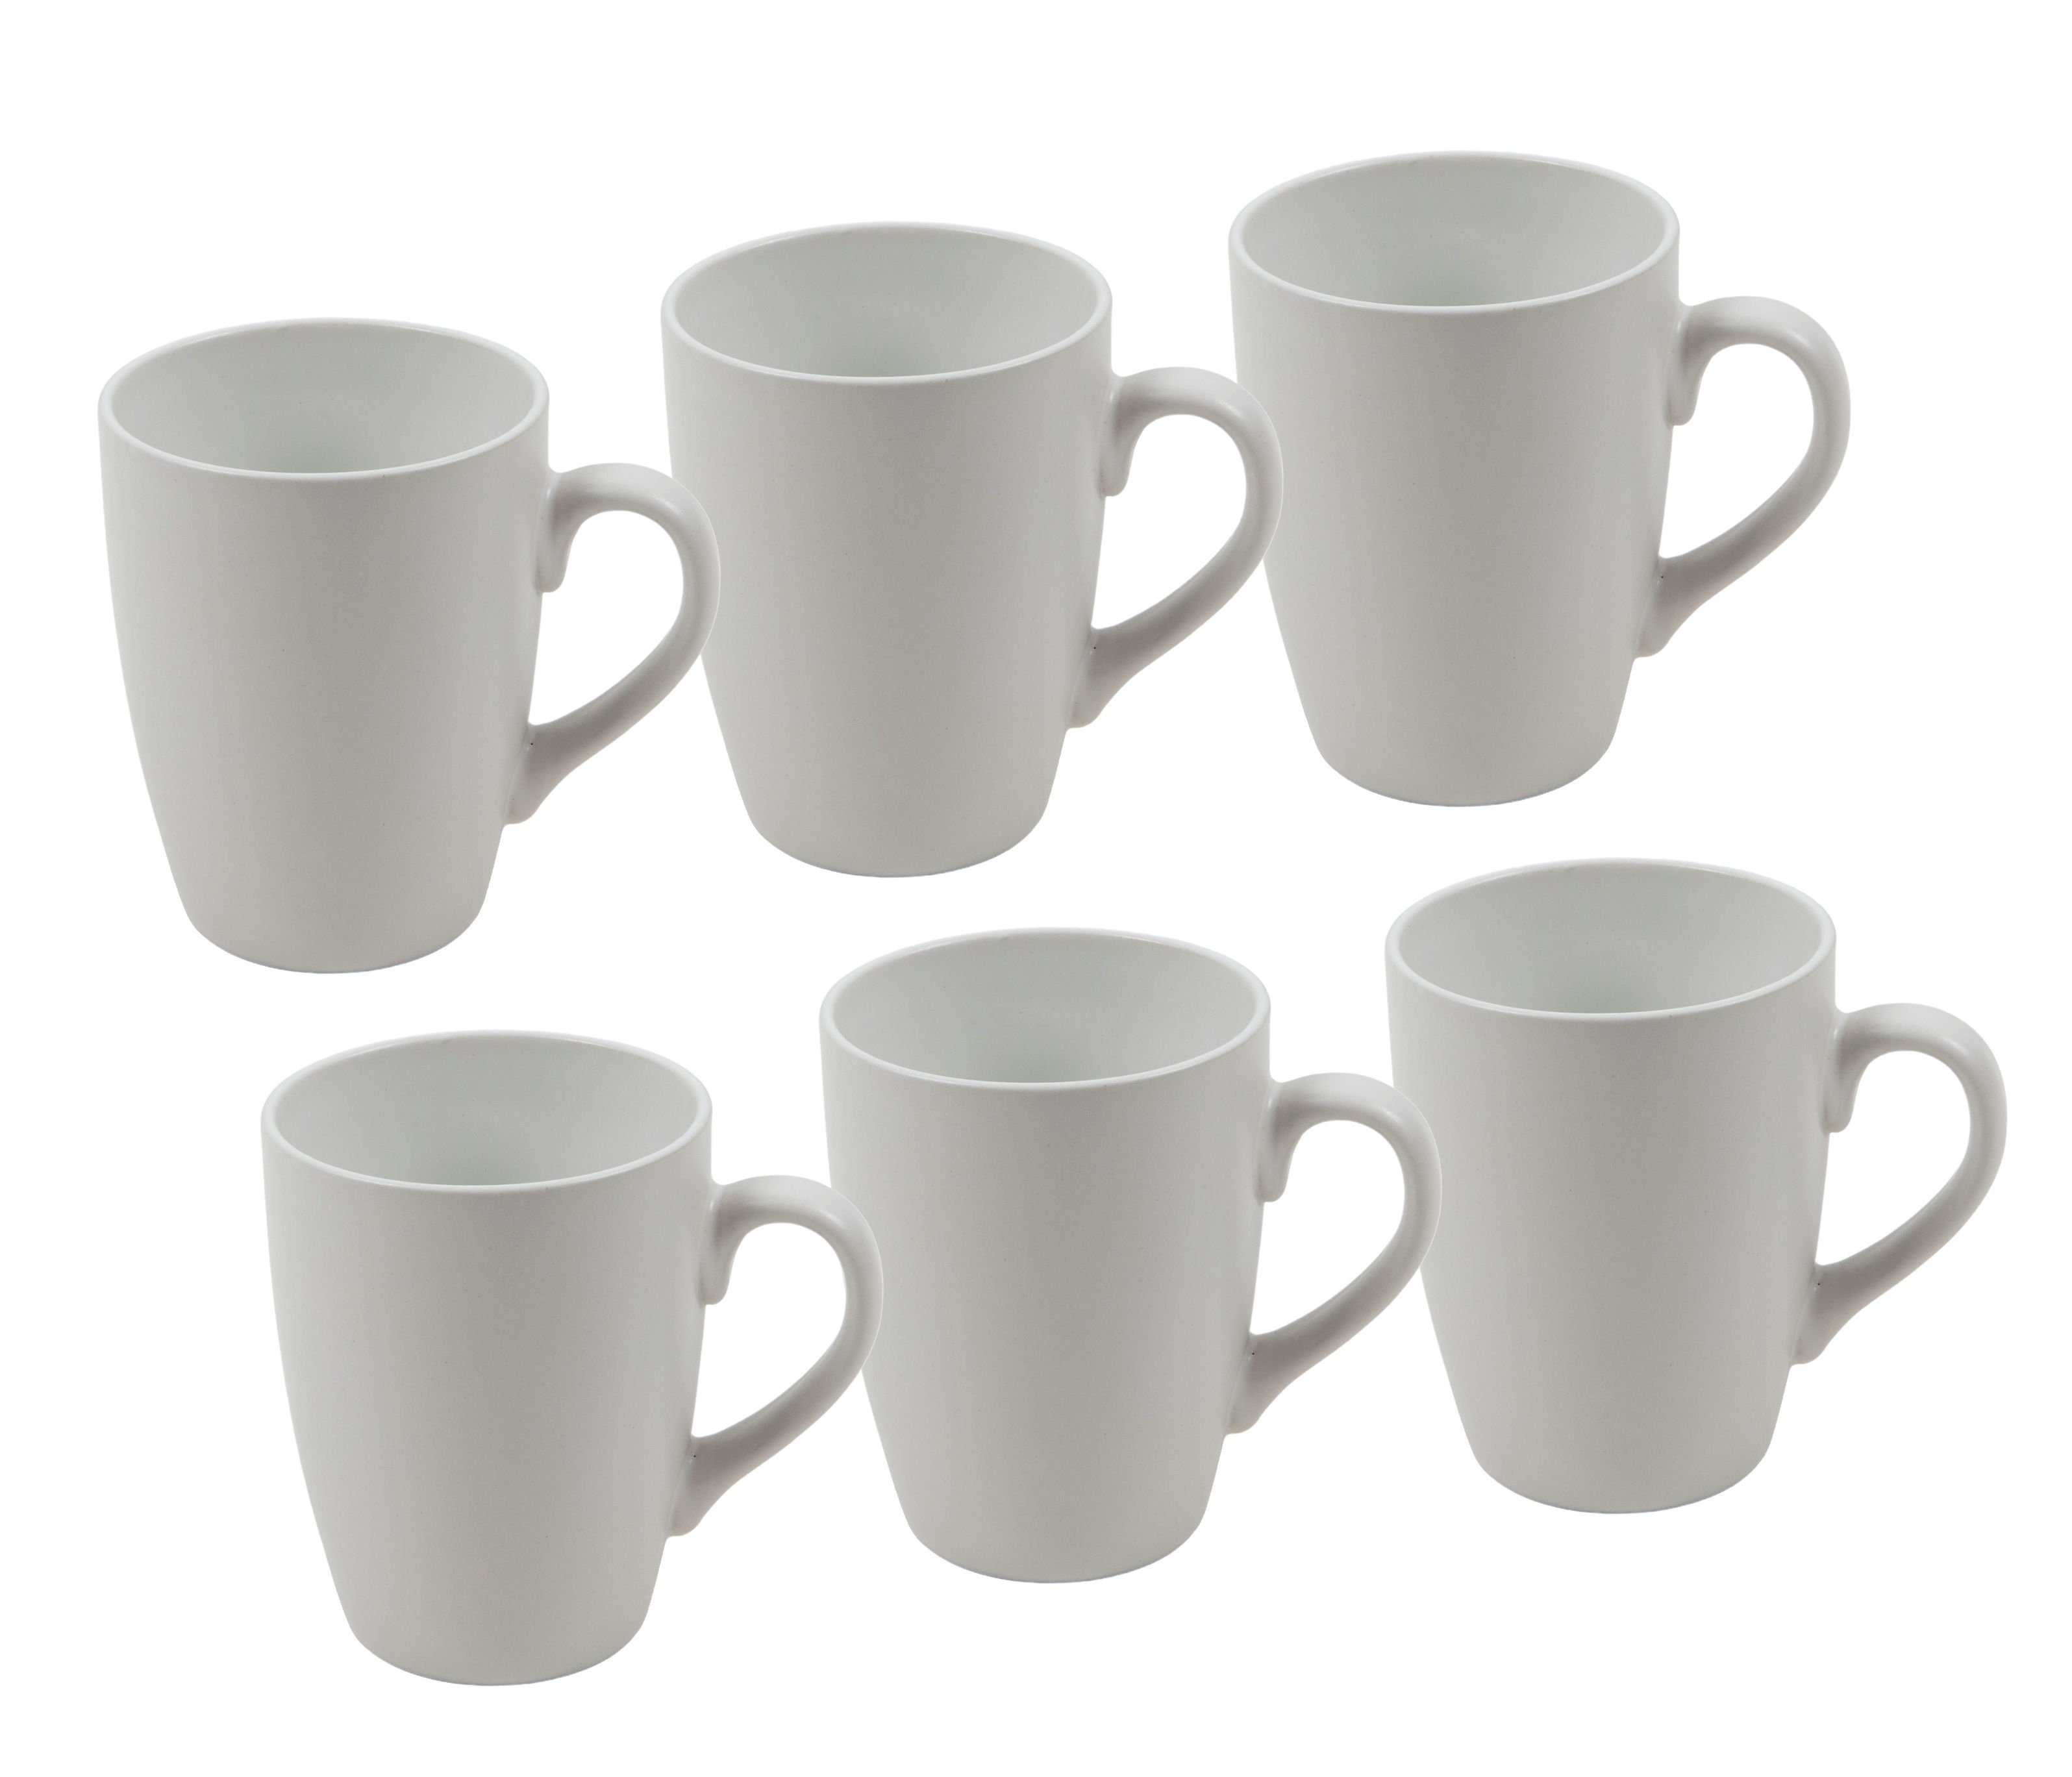 Spetebo Becher Kaffeebecher in weiß matt - 6er Set, Porzellan, Tassen für  ca. 340 ml